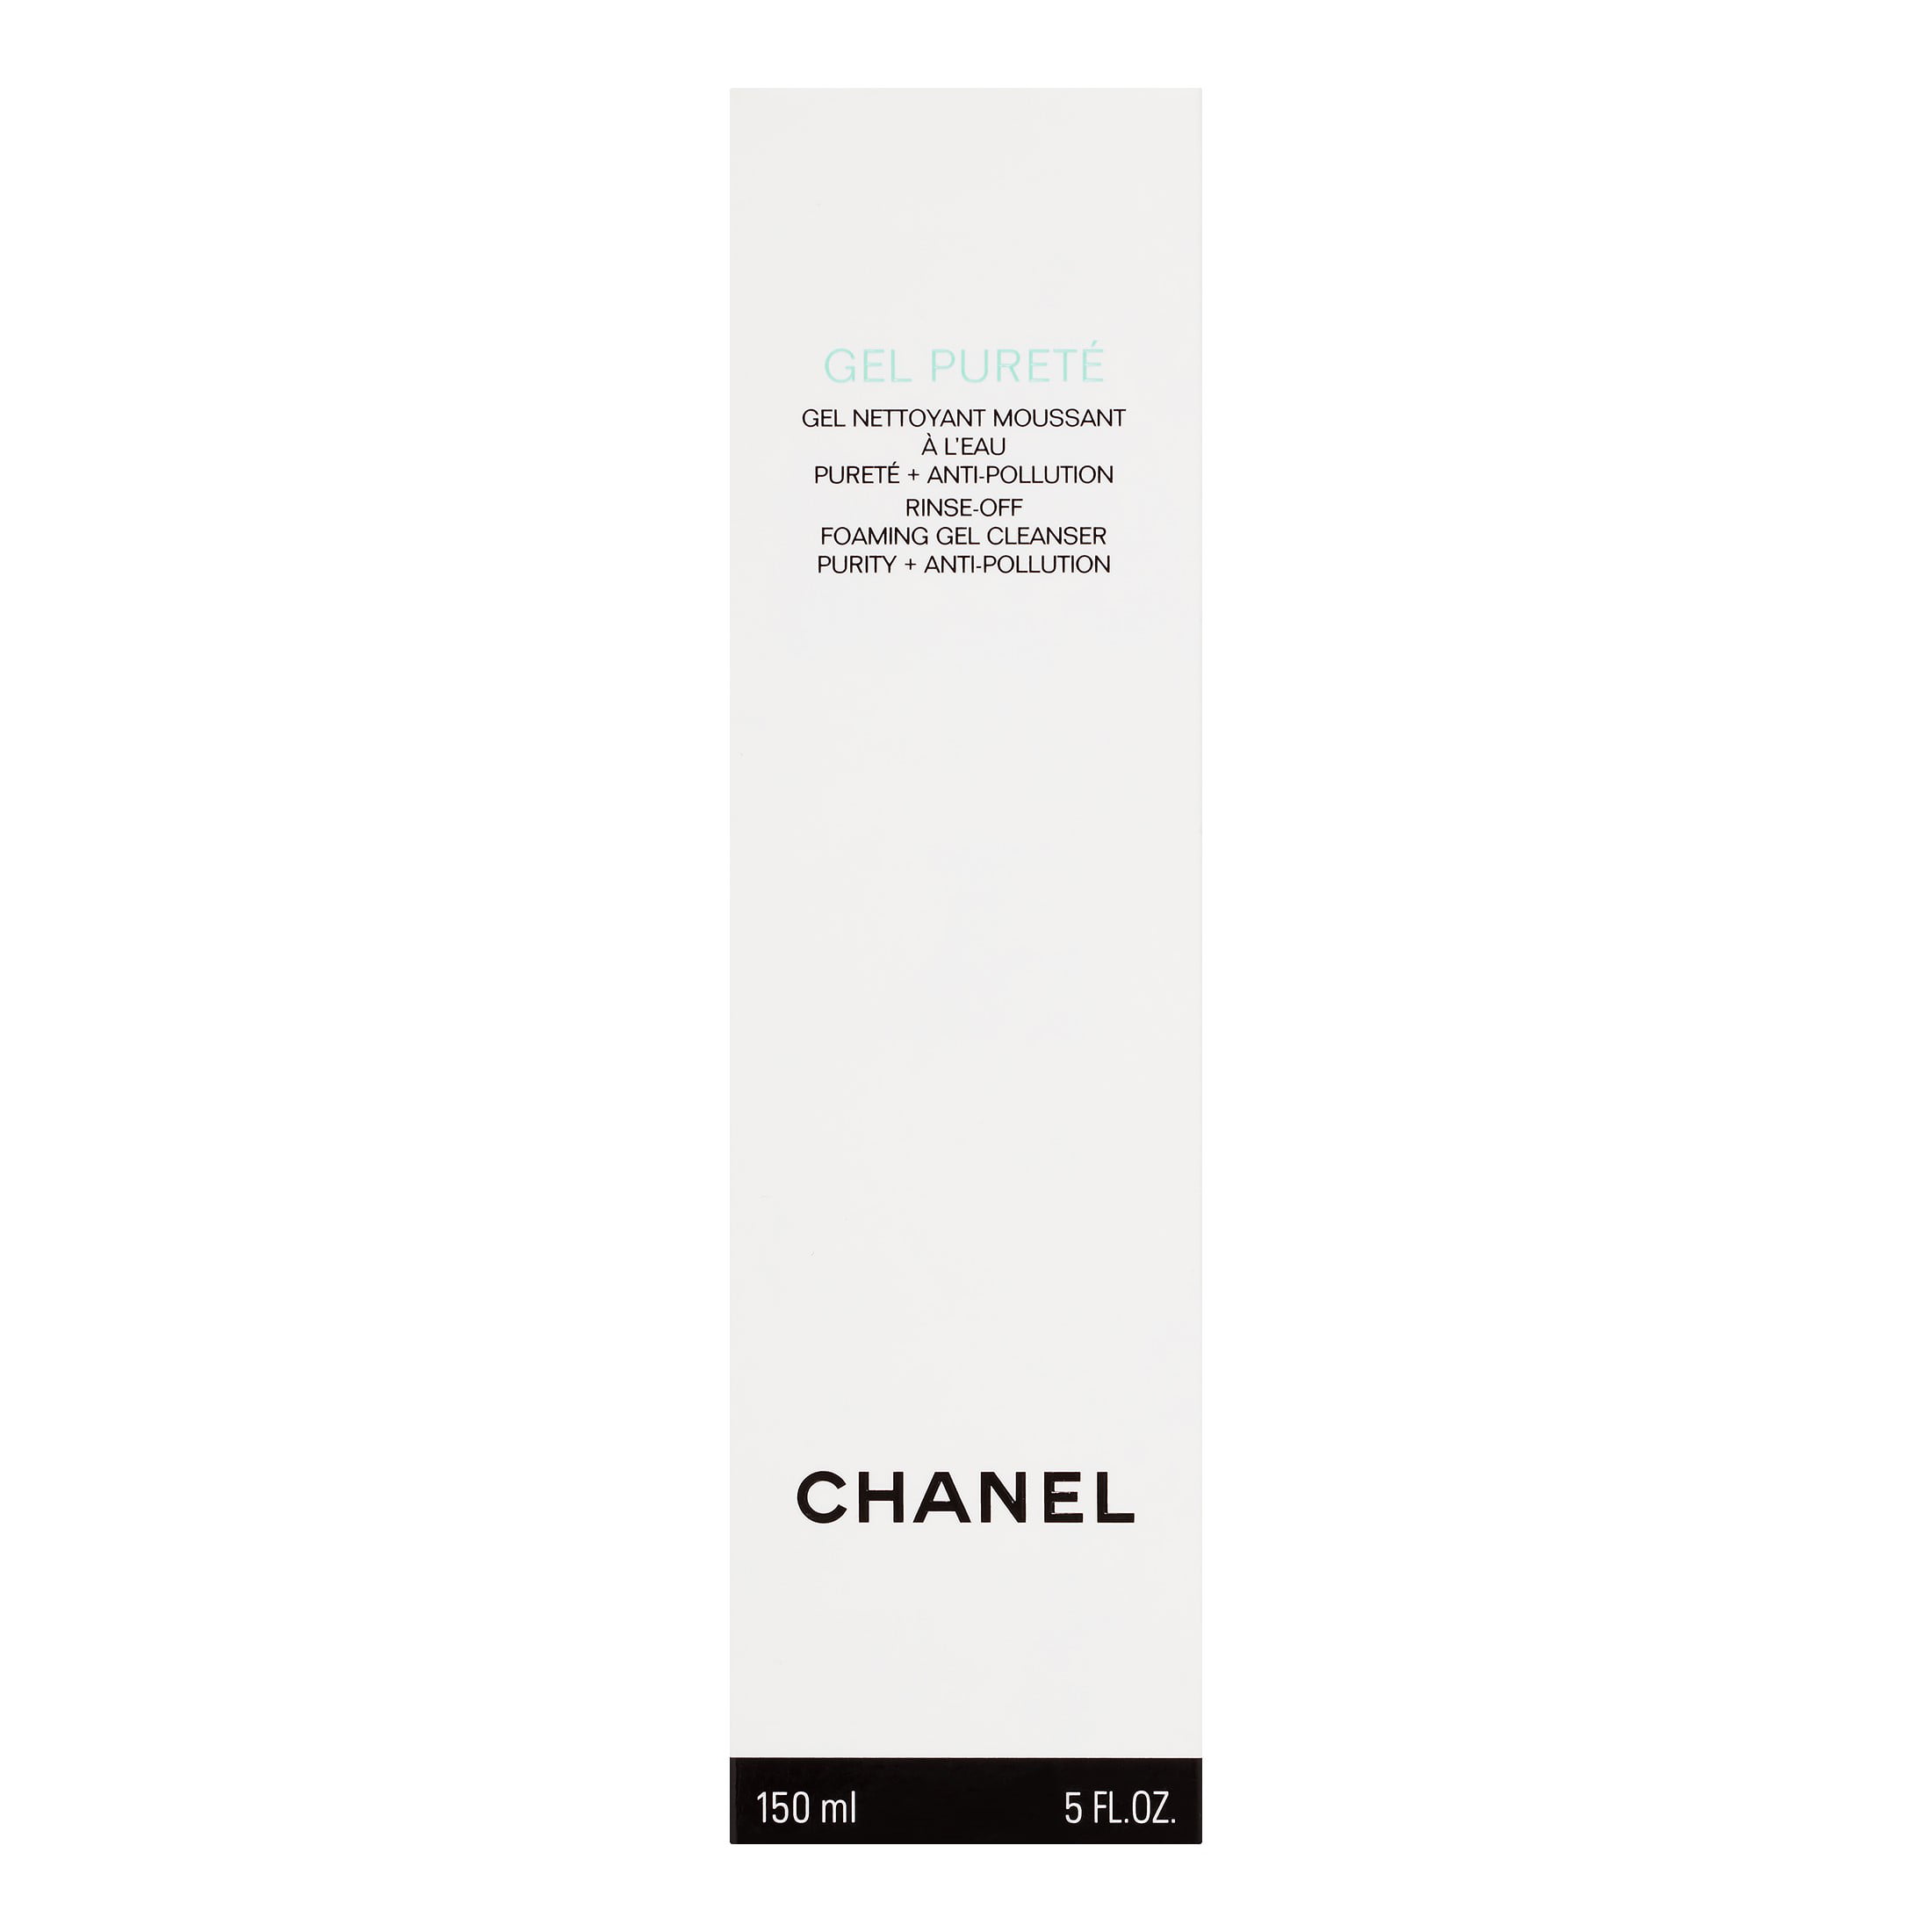 CHANEL  Skincare  Chanel Gel Purete Foaming Gel Cleanser 5oz  Poshmark